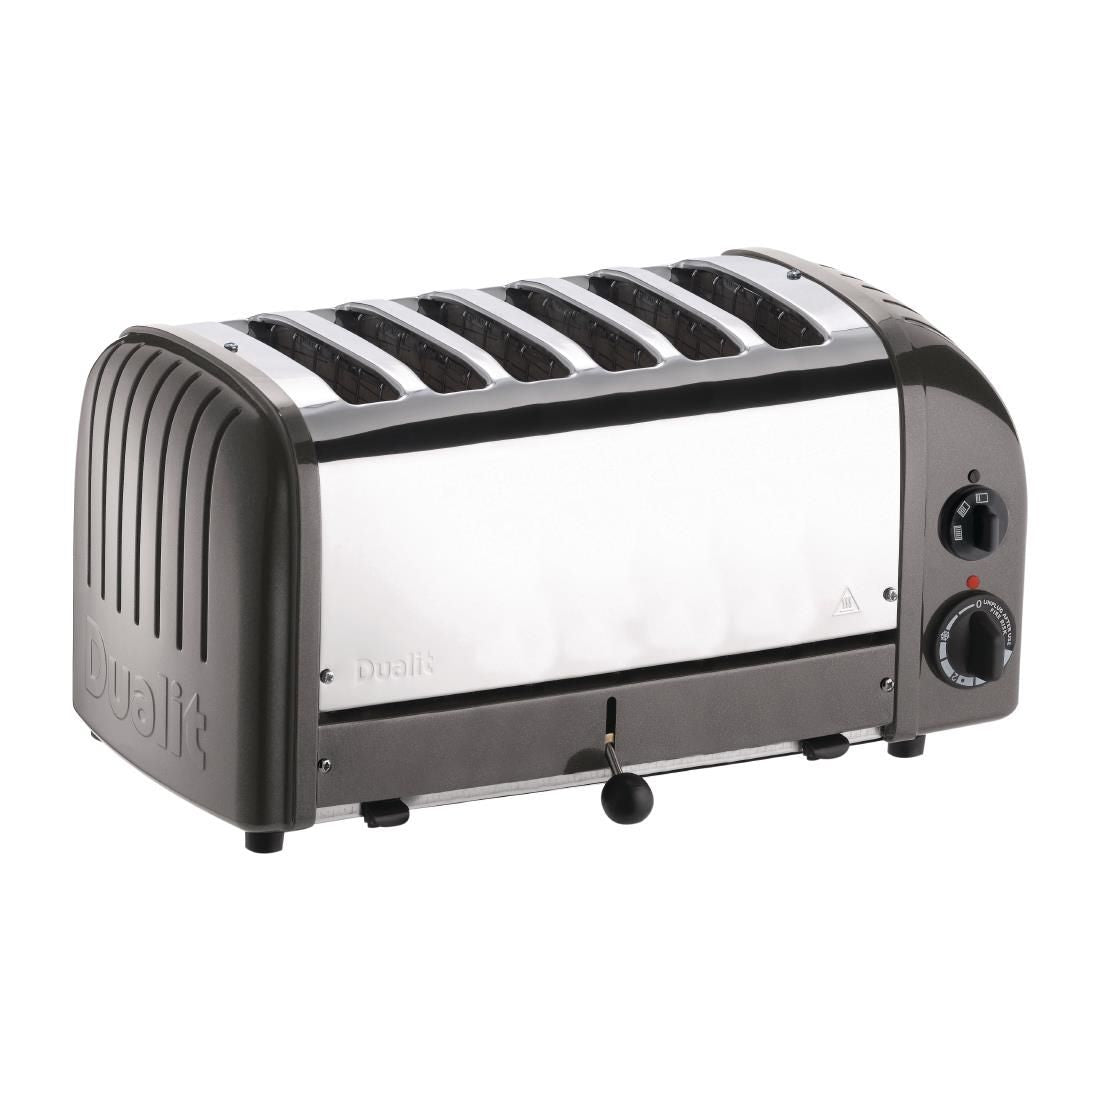 Dualit 6 Slice Vario Toaster Charcoal 60156 - E269 Toasters Dualit   